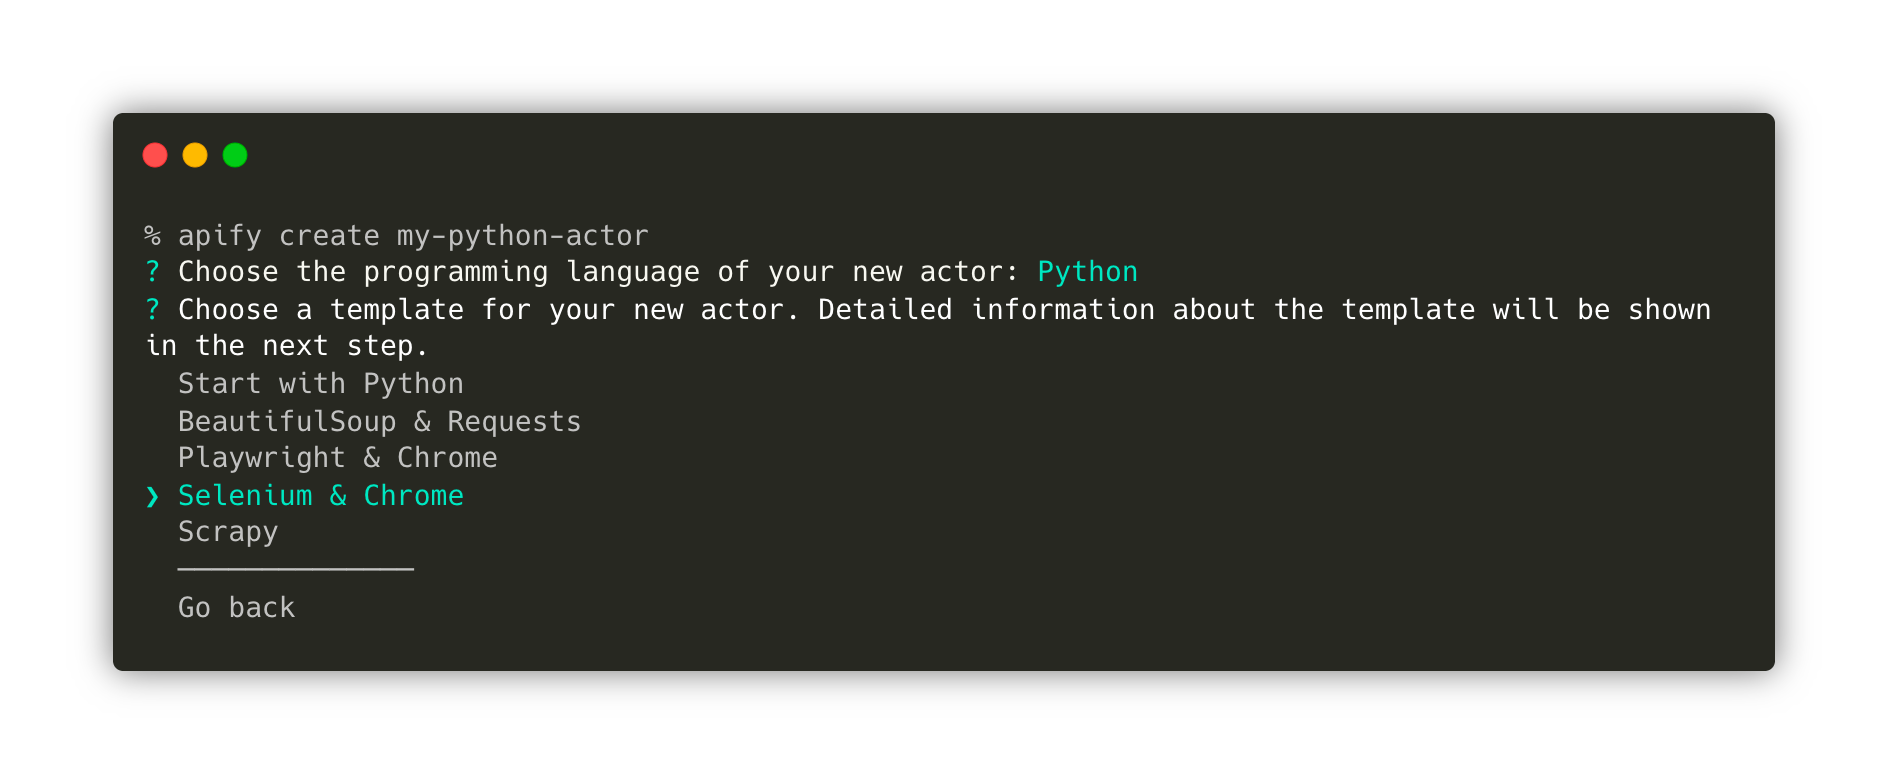 Apify Python SDK Templates